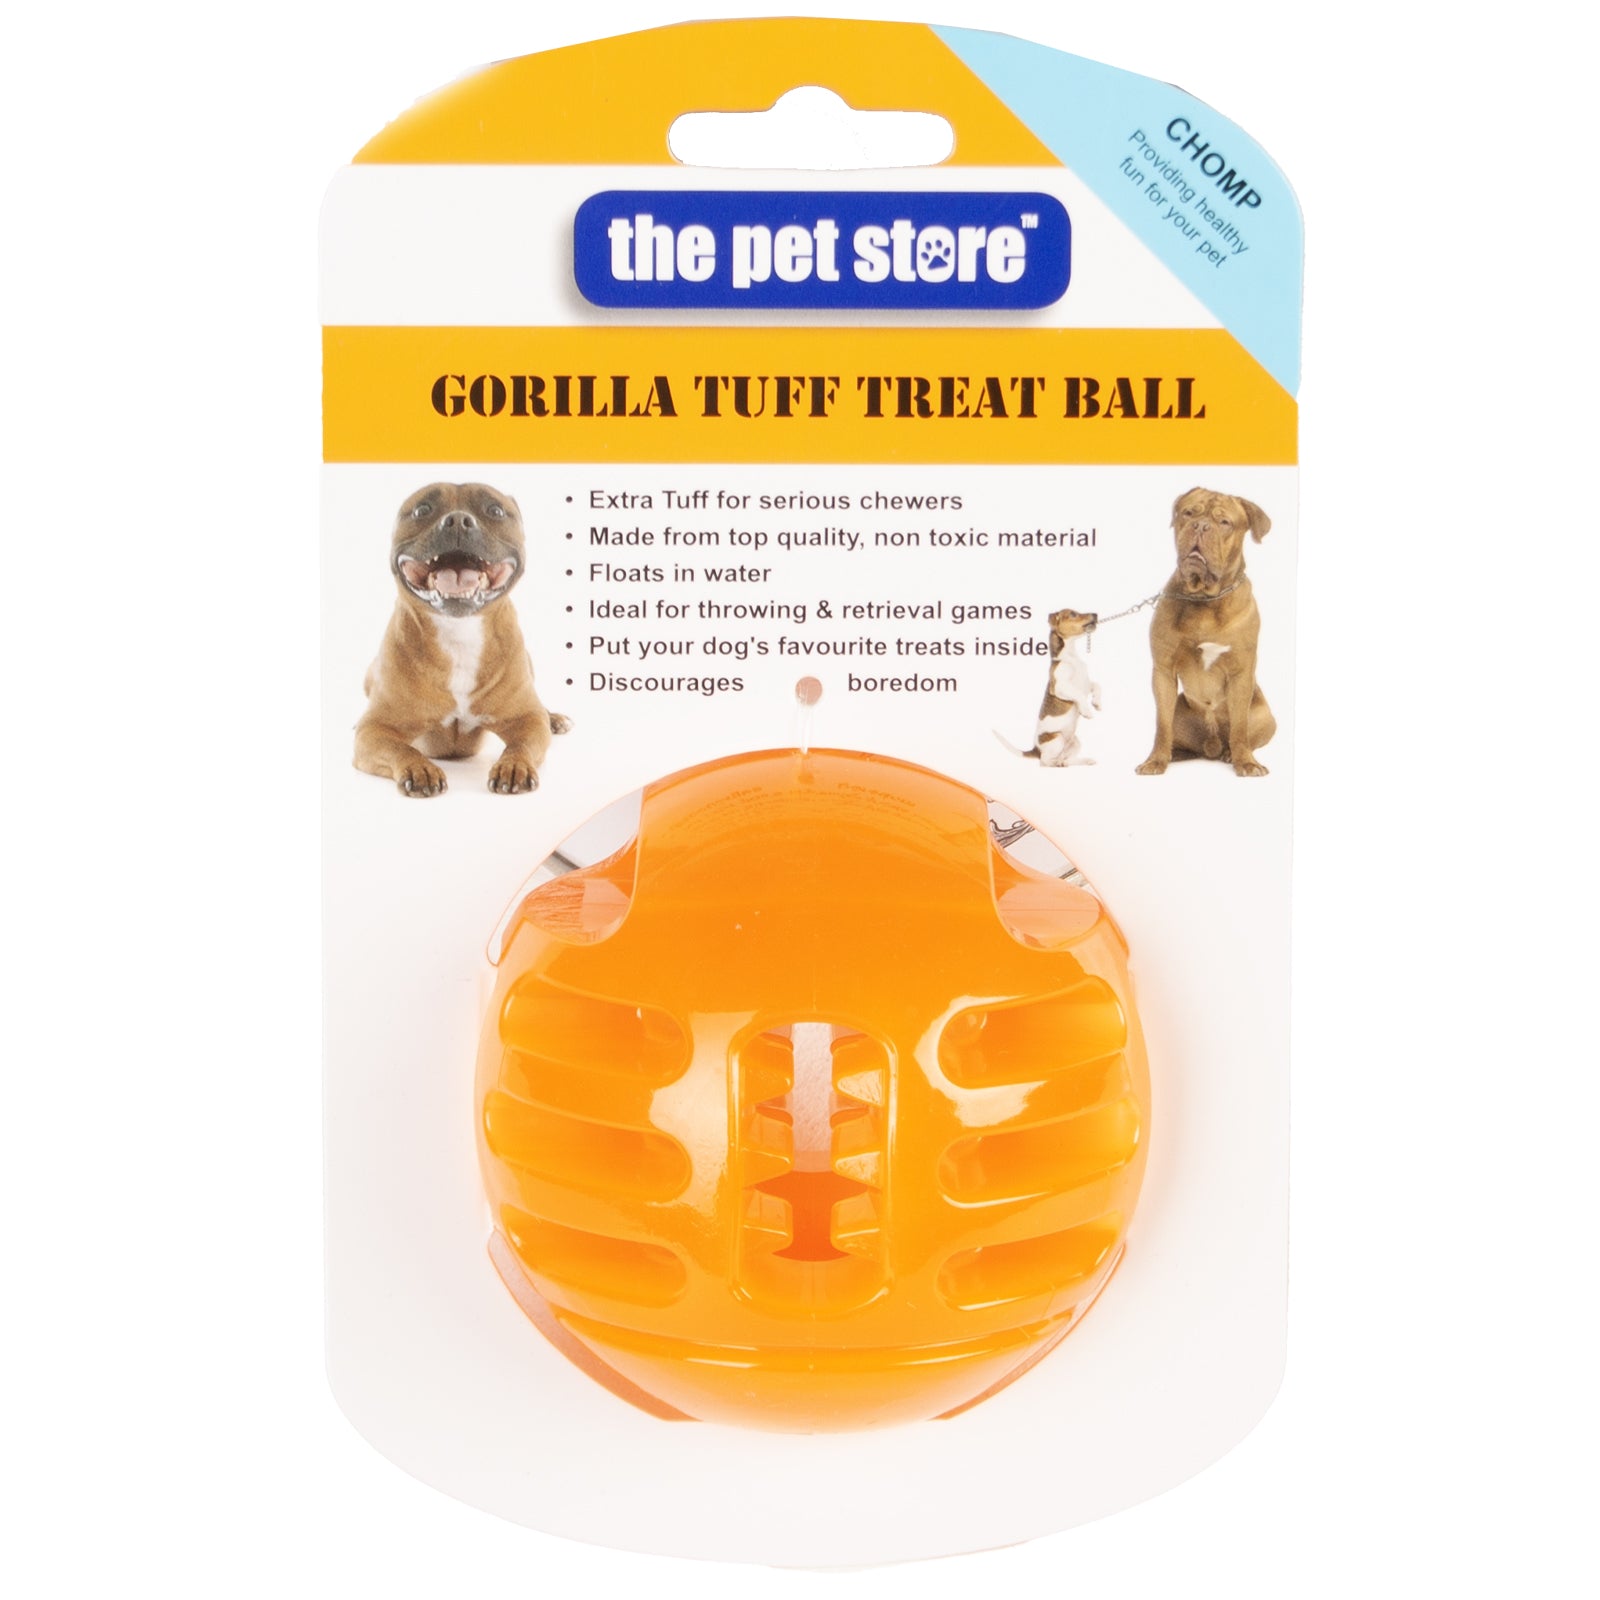 Gorilla Turf Treat Ball Dog Toy